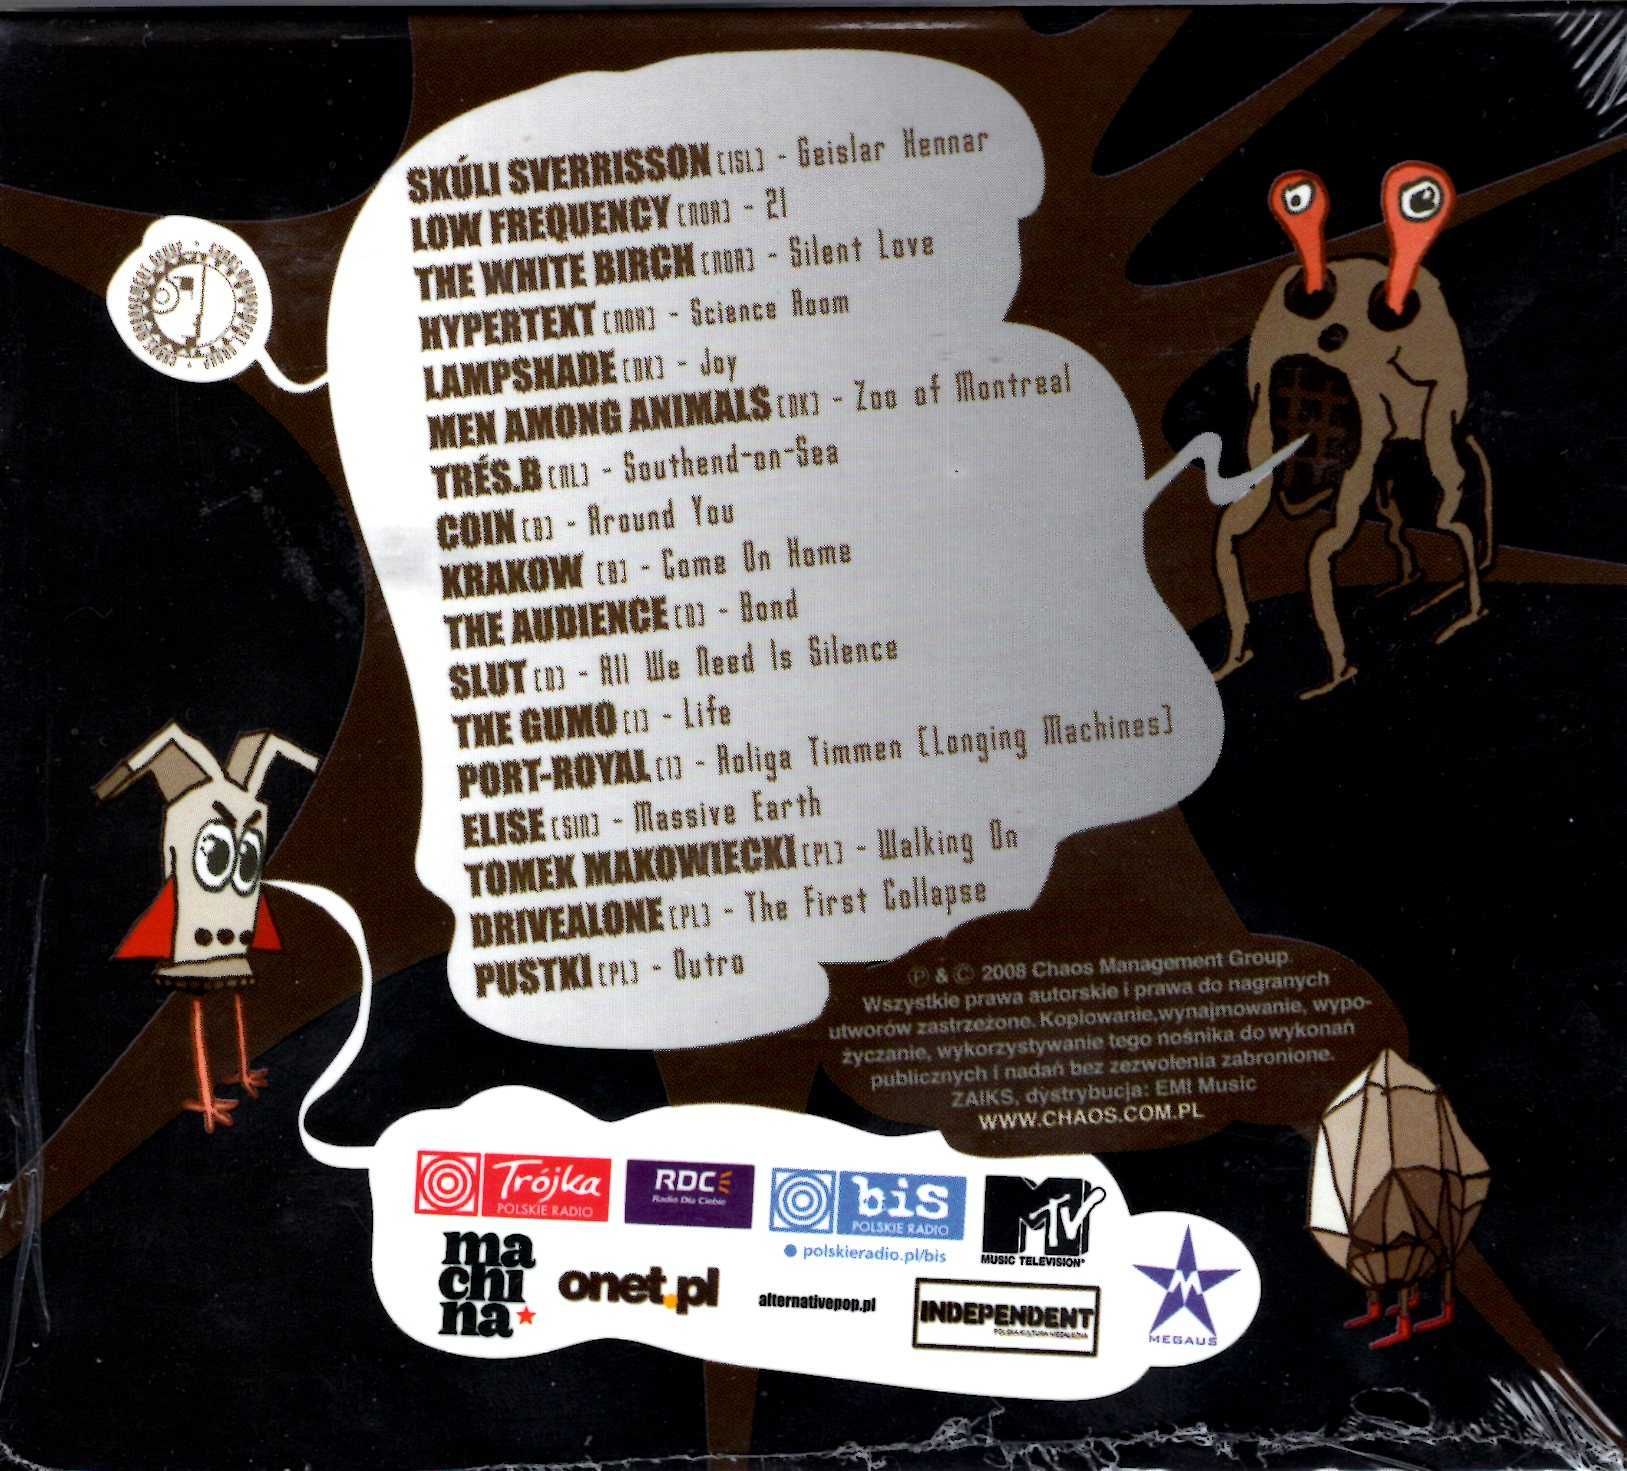 Alternative Trippin' 2 (CD) Tres.B Pustki Lampshade